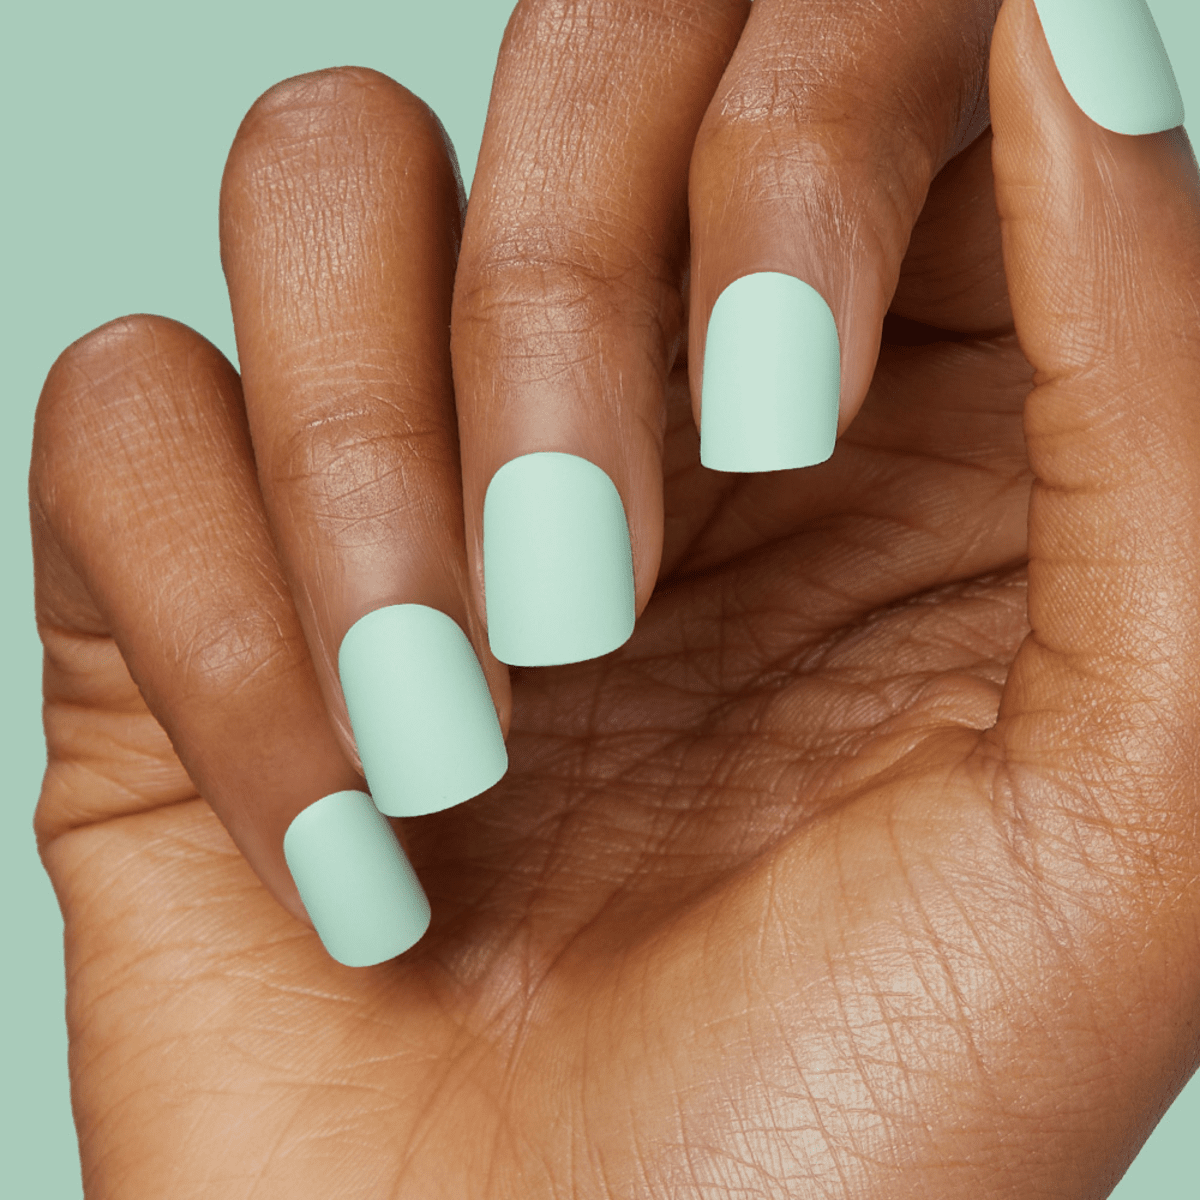 imPRESS Color Press-On Manicure  - Fresh Mint